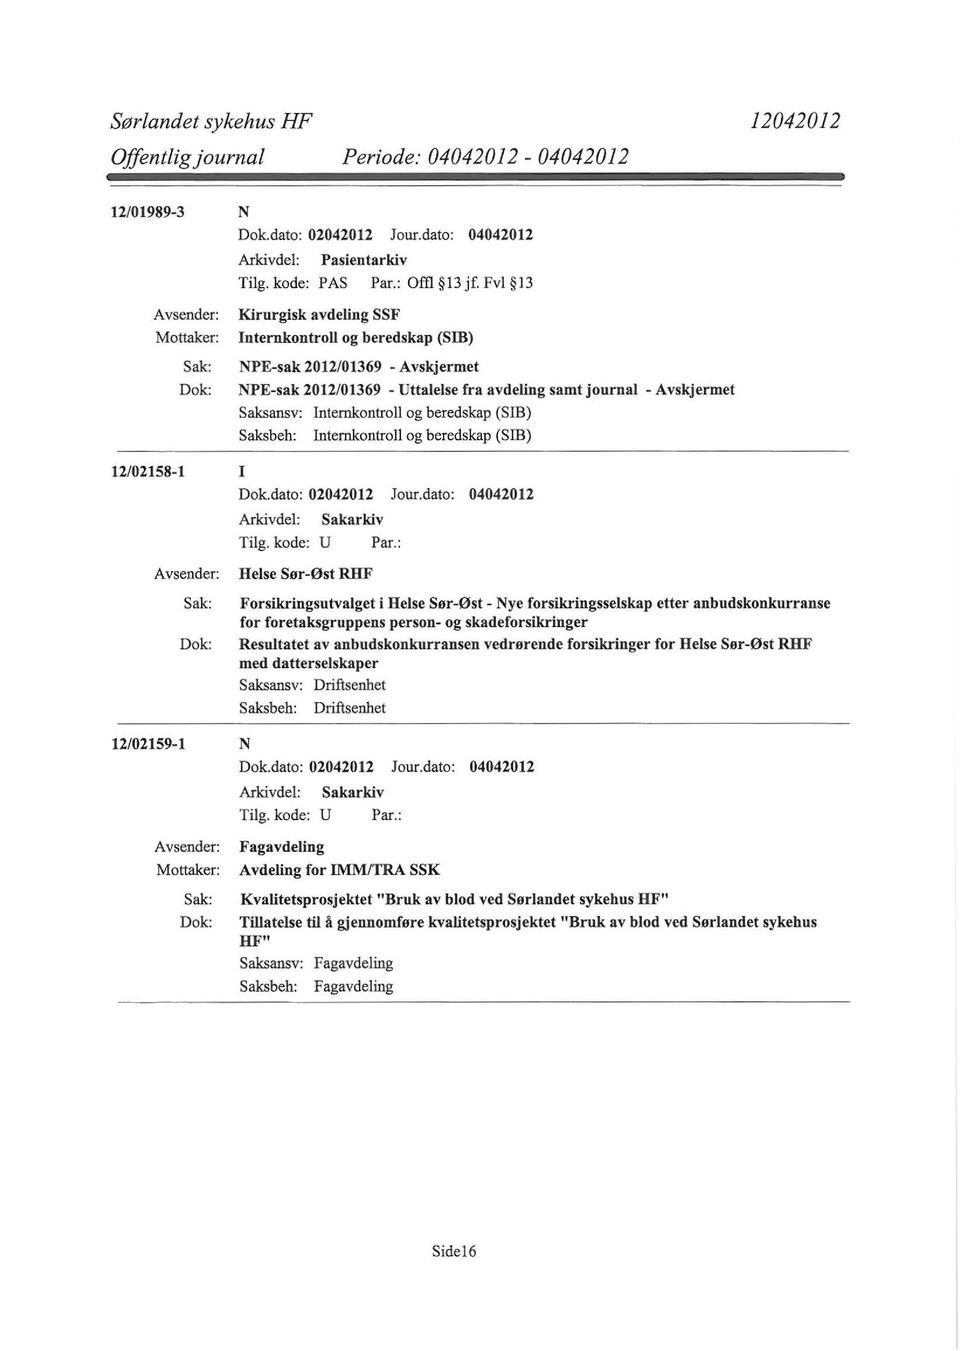 Internkontroll og beredskap (SIB) 12/02158-1 I Tilg. kode: U Par.